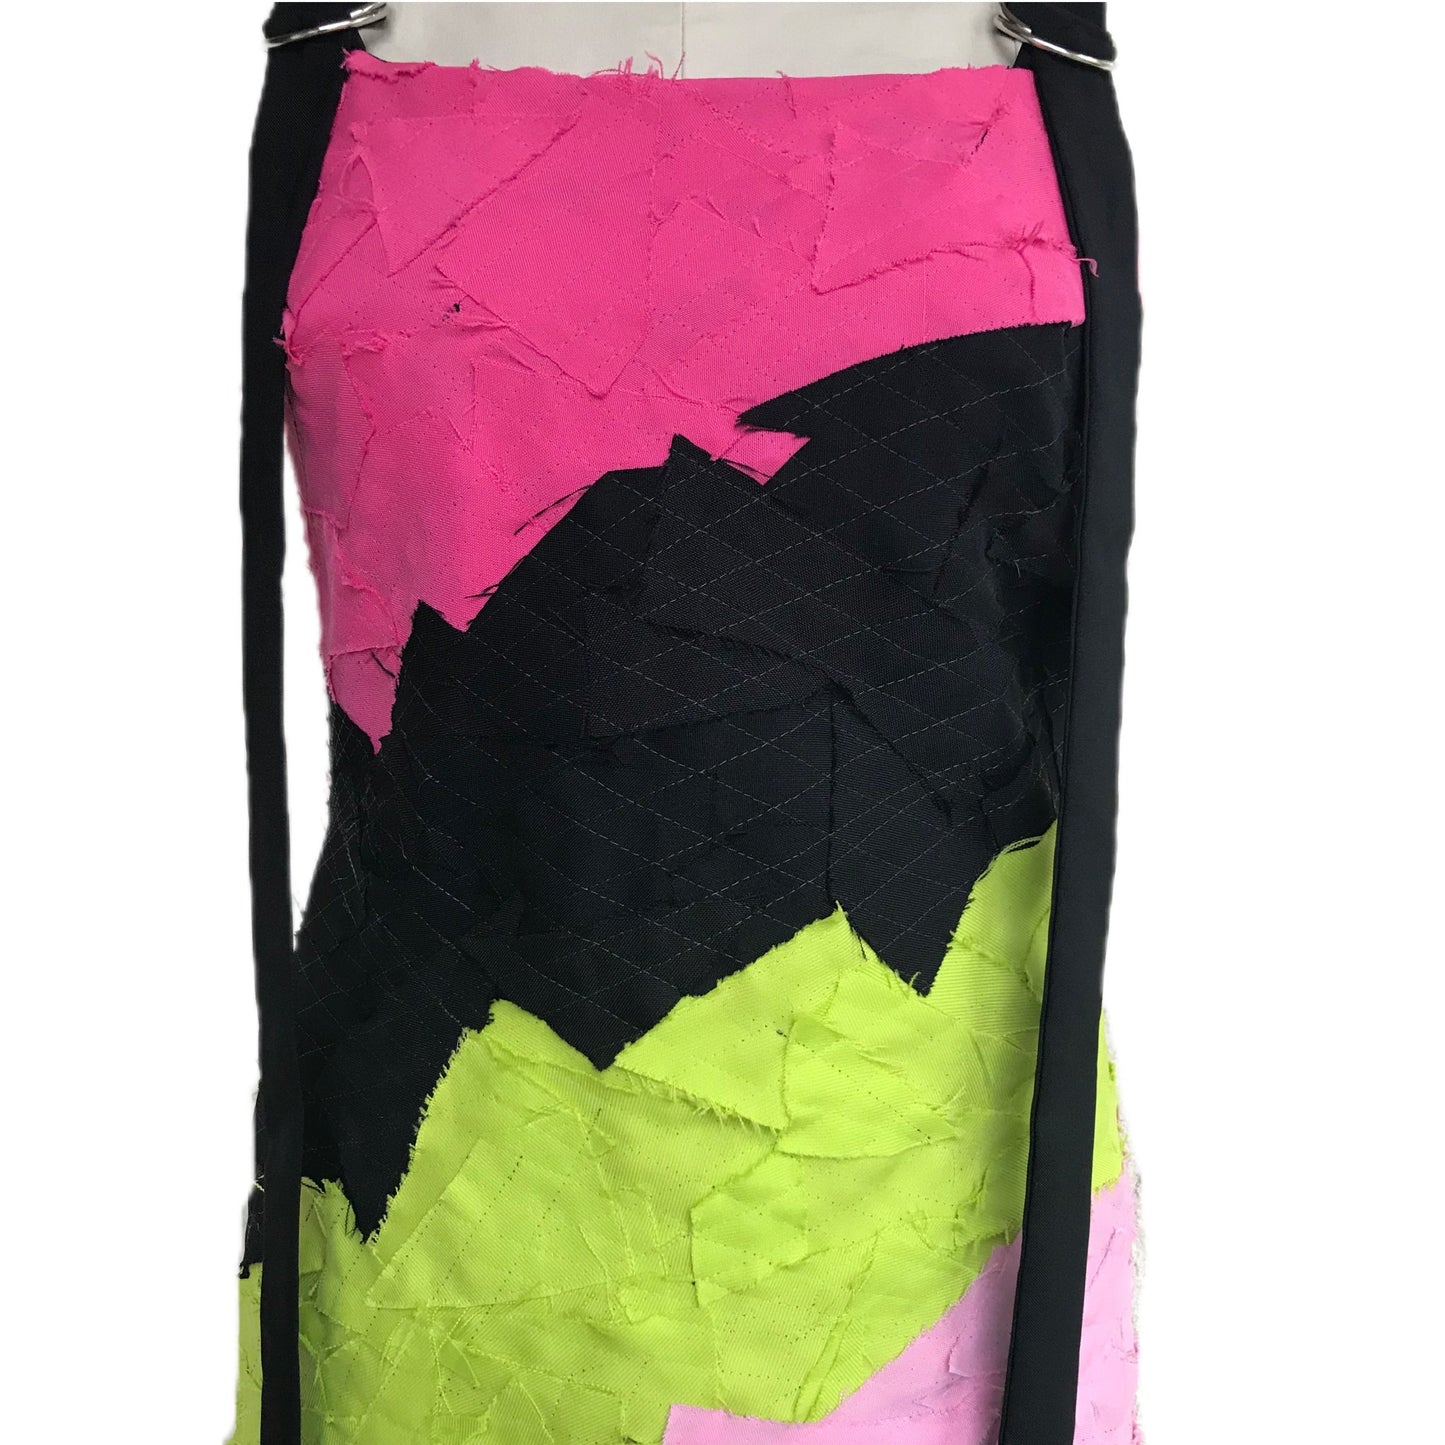 Scrap Mini Dress with Adjustable Straps - Size 6